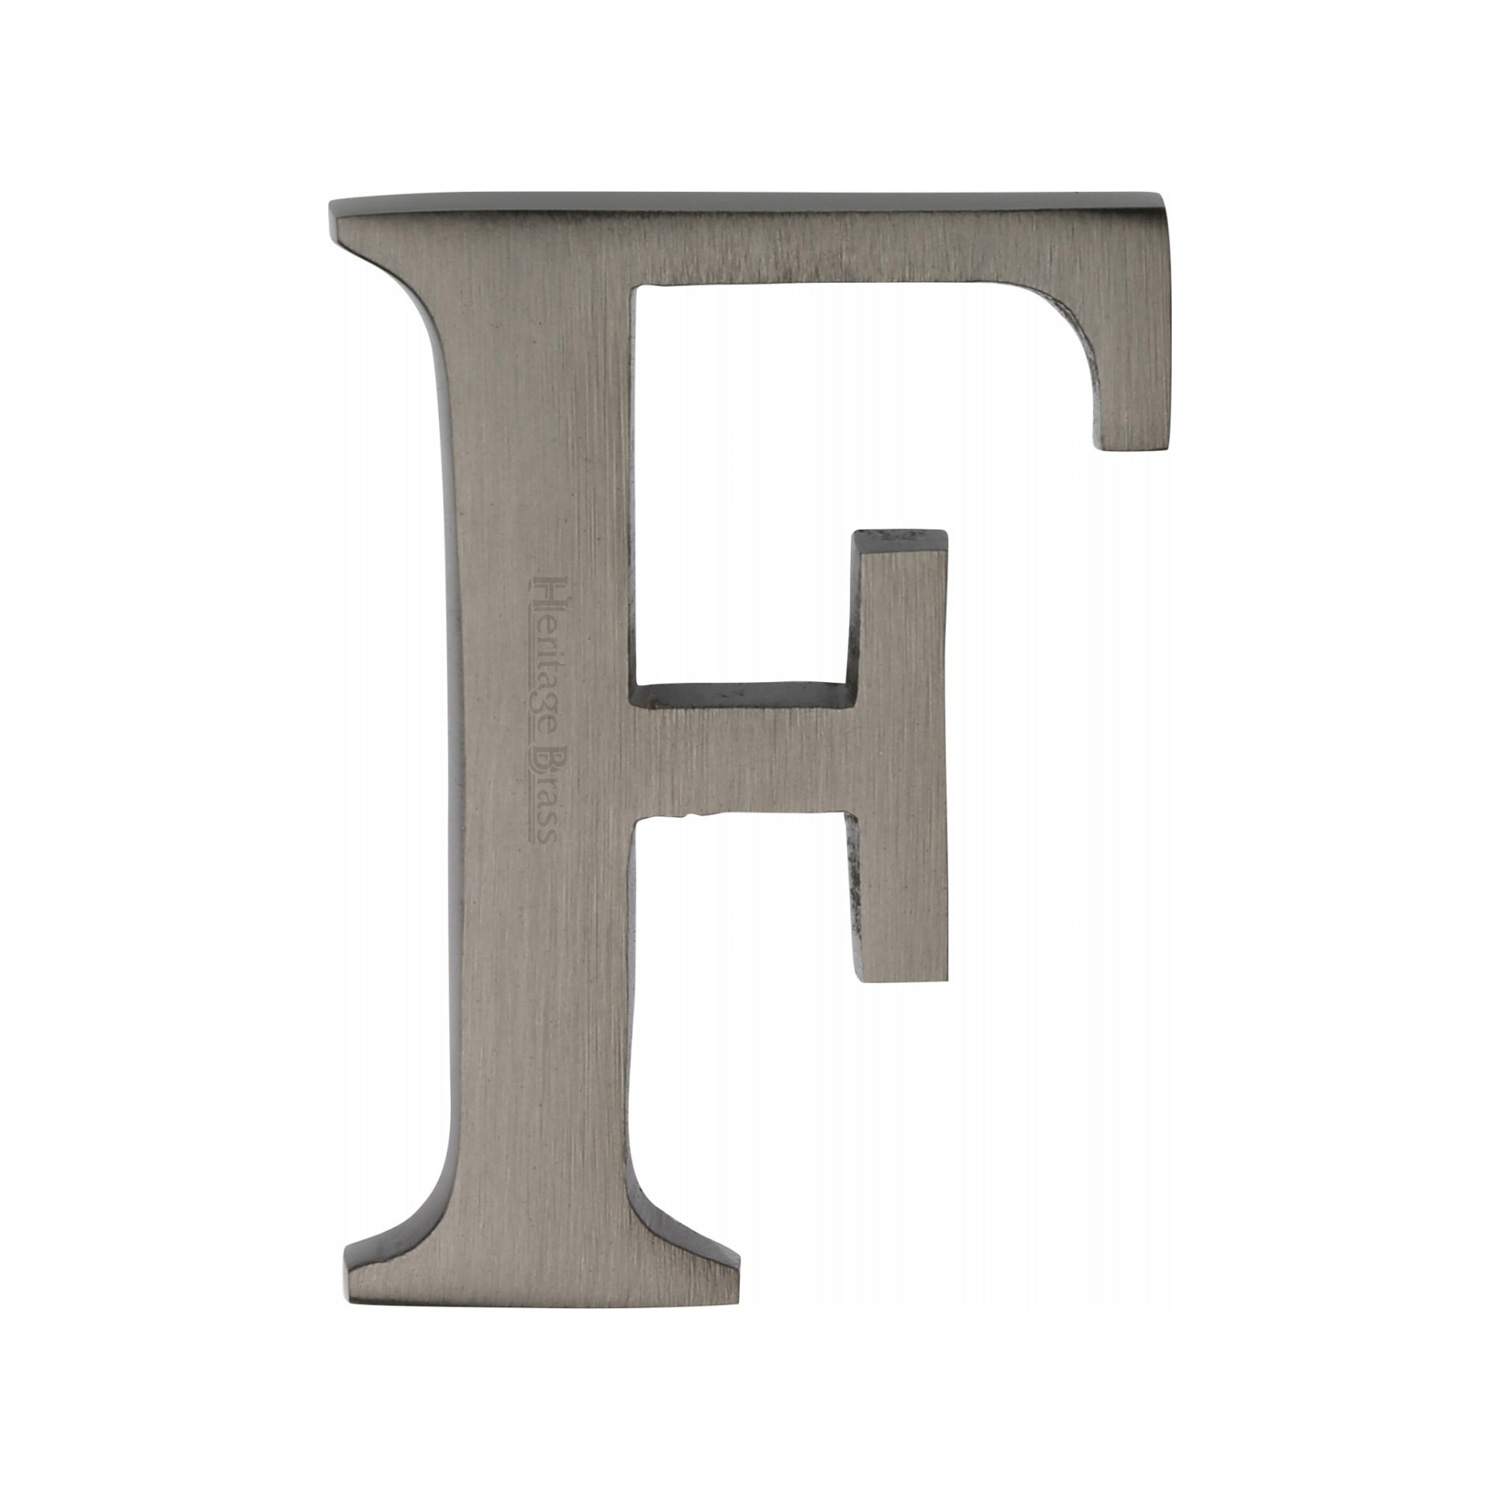 Heritage Brass Alphabet F Pin Fix 51mm (2")